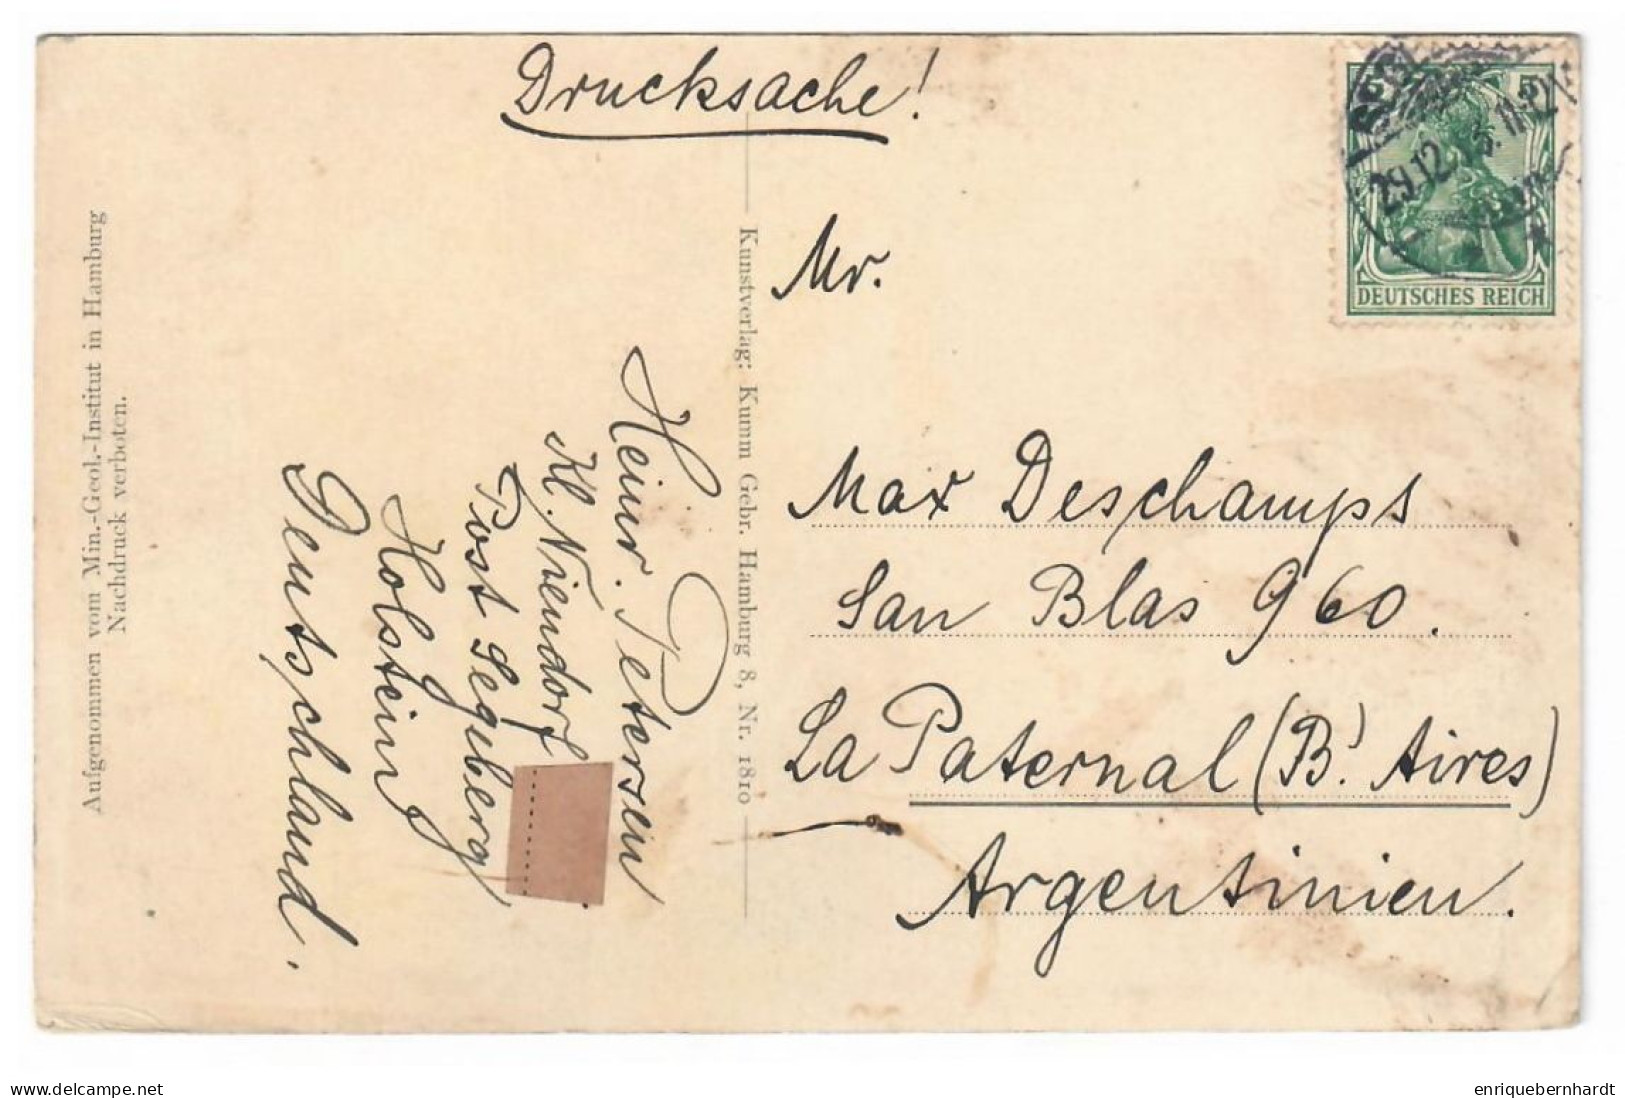 DEUTSCHLAND // SOLBAD SEGEBERG // BARBAROSSA-HÖHLE IM KALKBERG // 1913 - Bad Segeberg